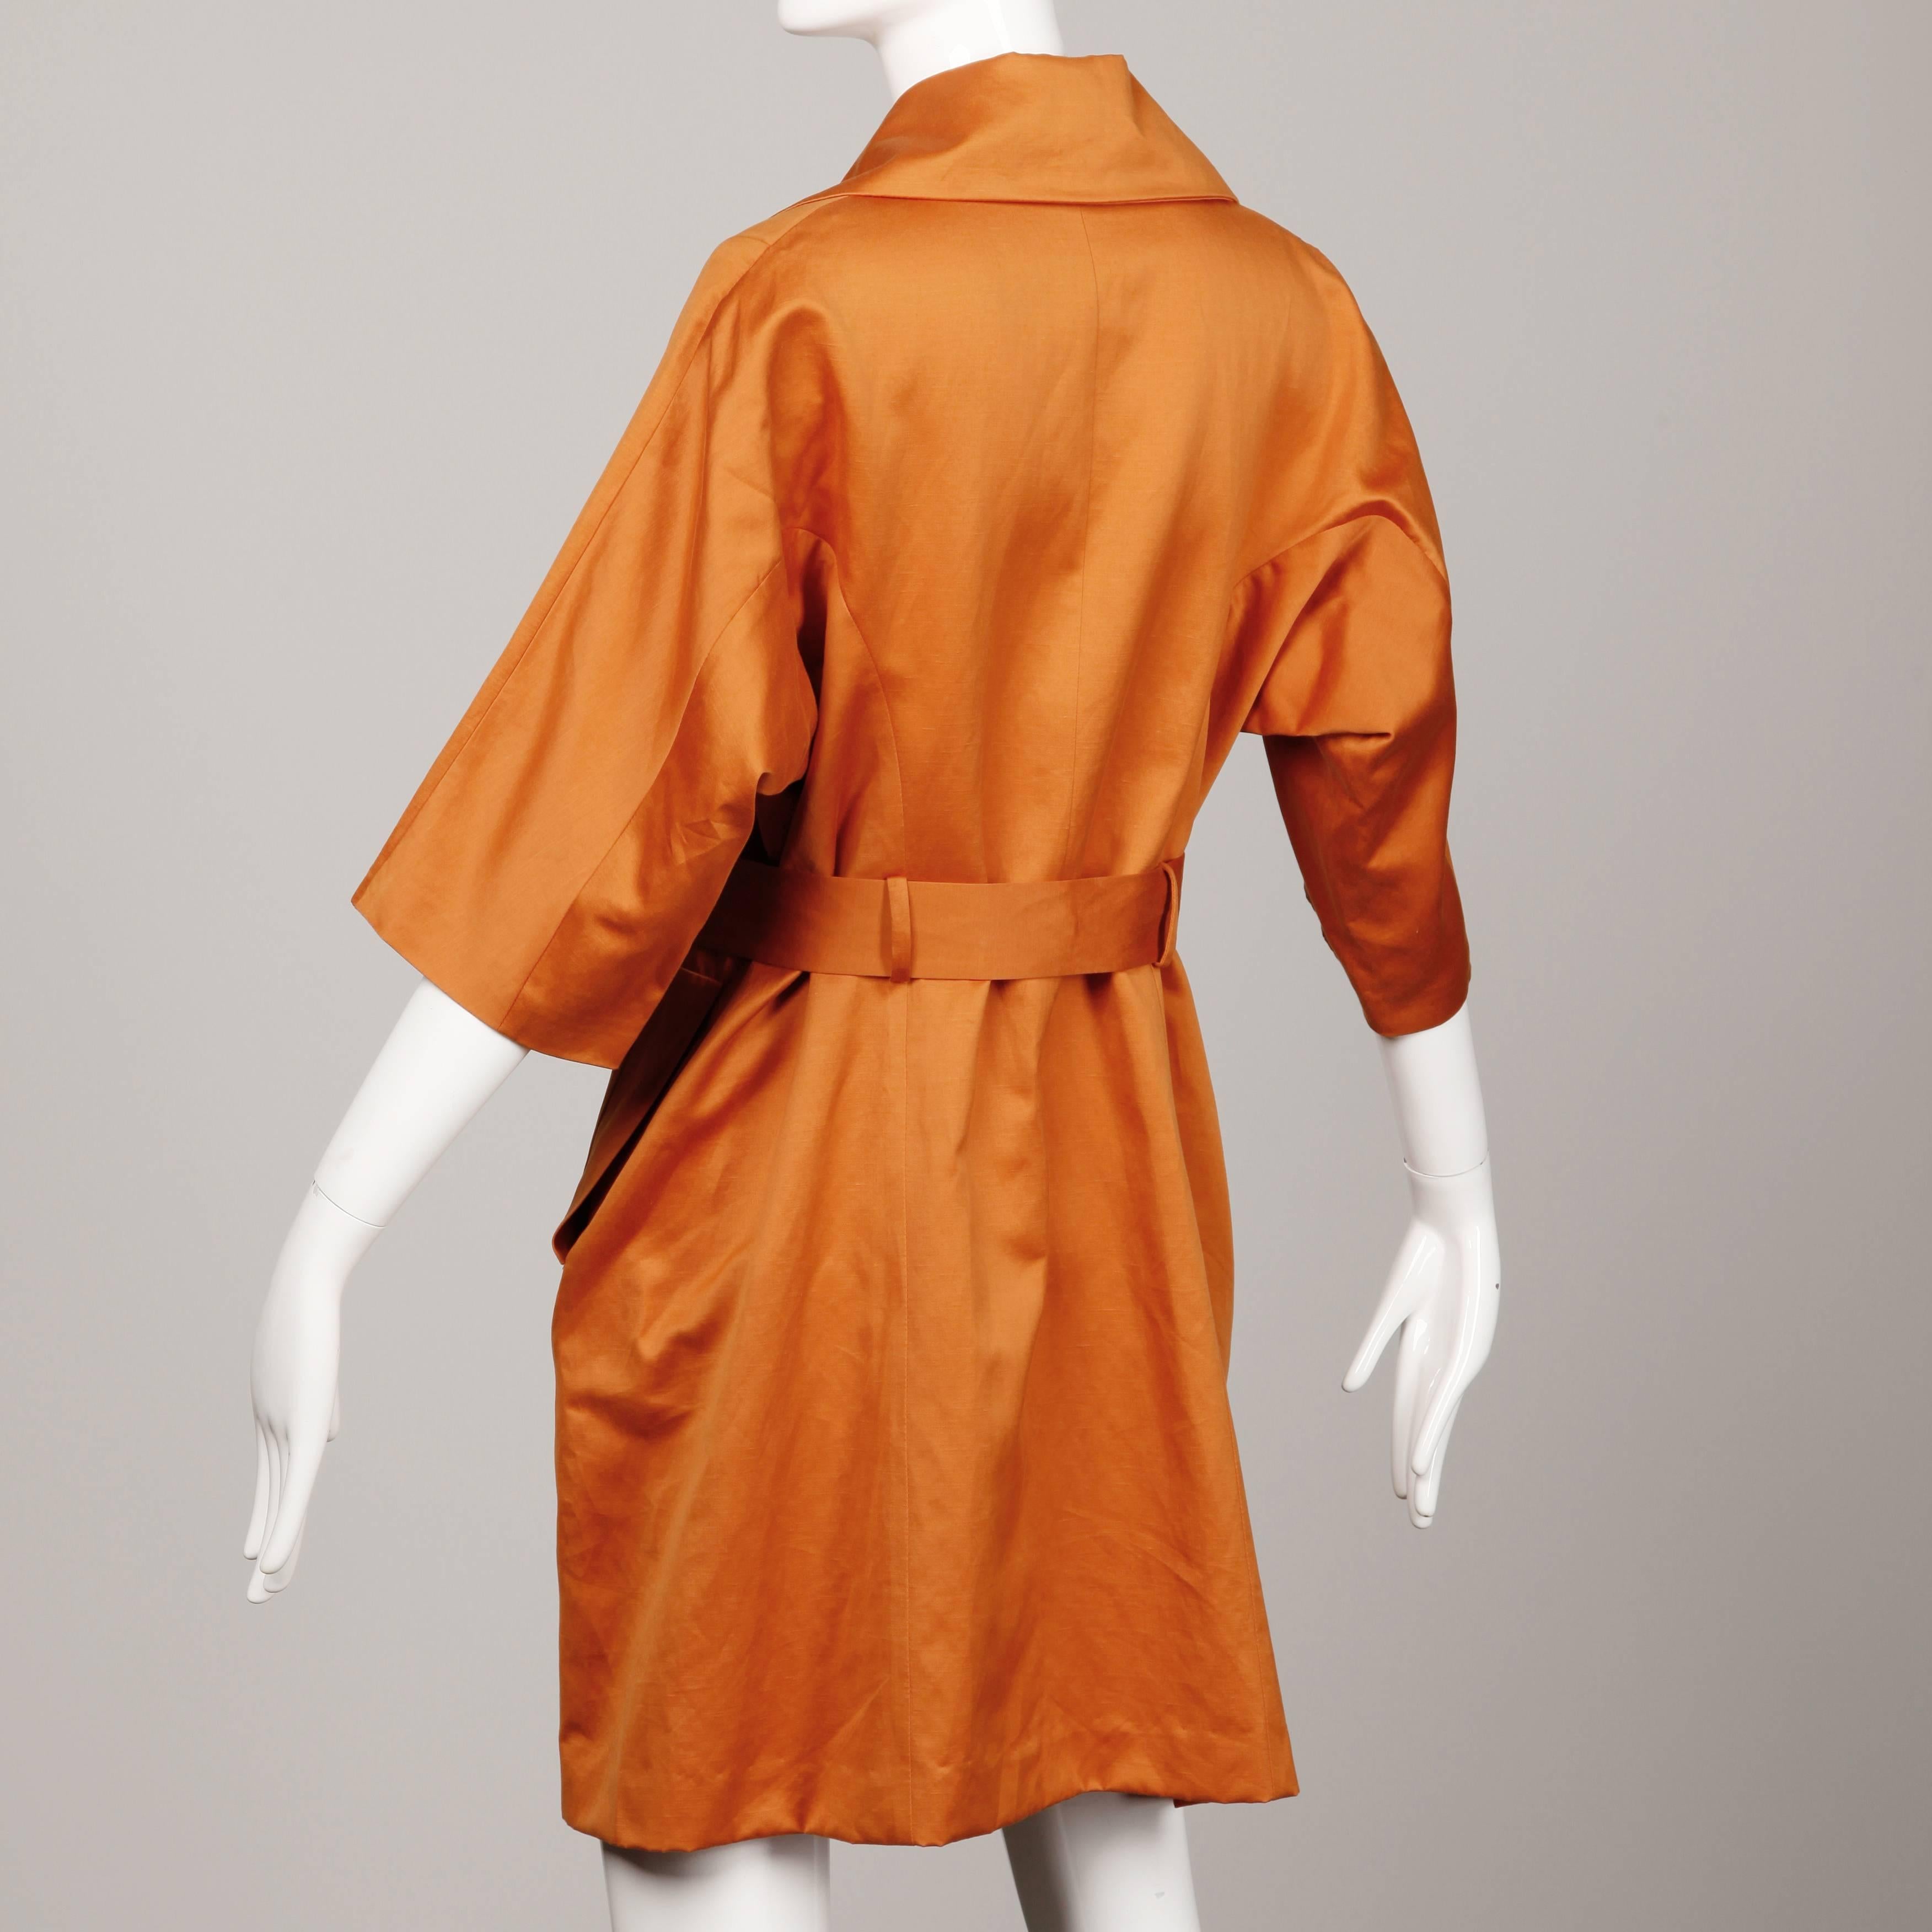 Yves Saint Laurent Rust/ Orange Fall Trench Coat Jacket For Sale 3